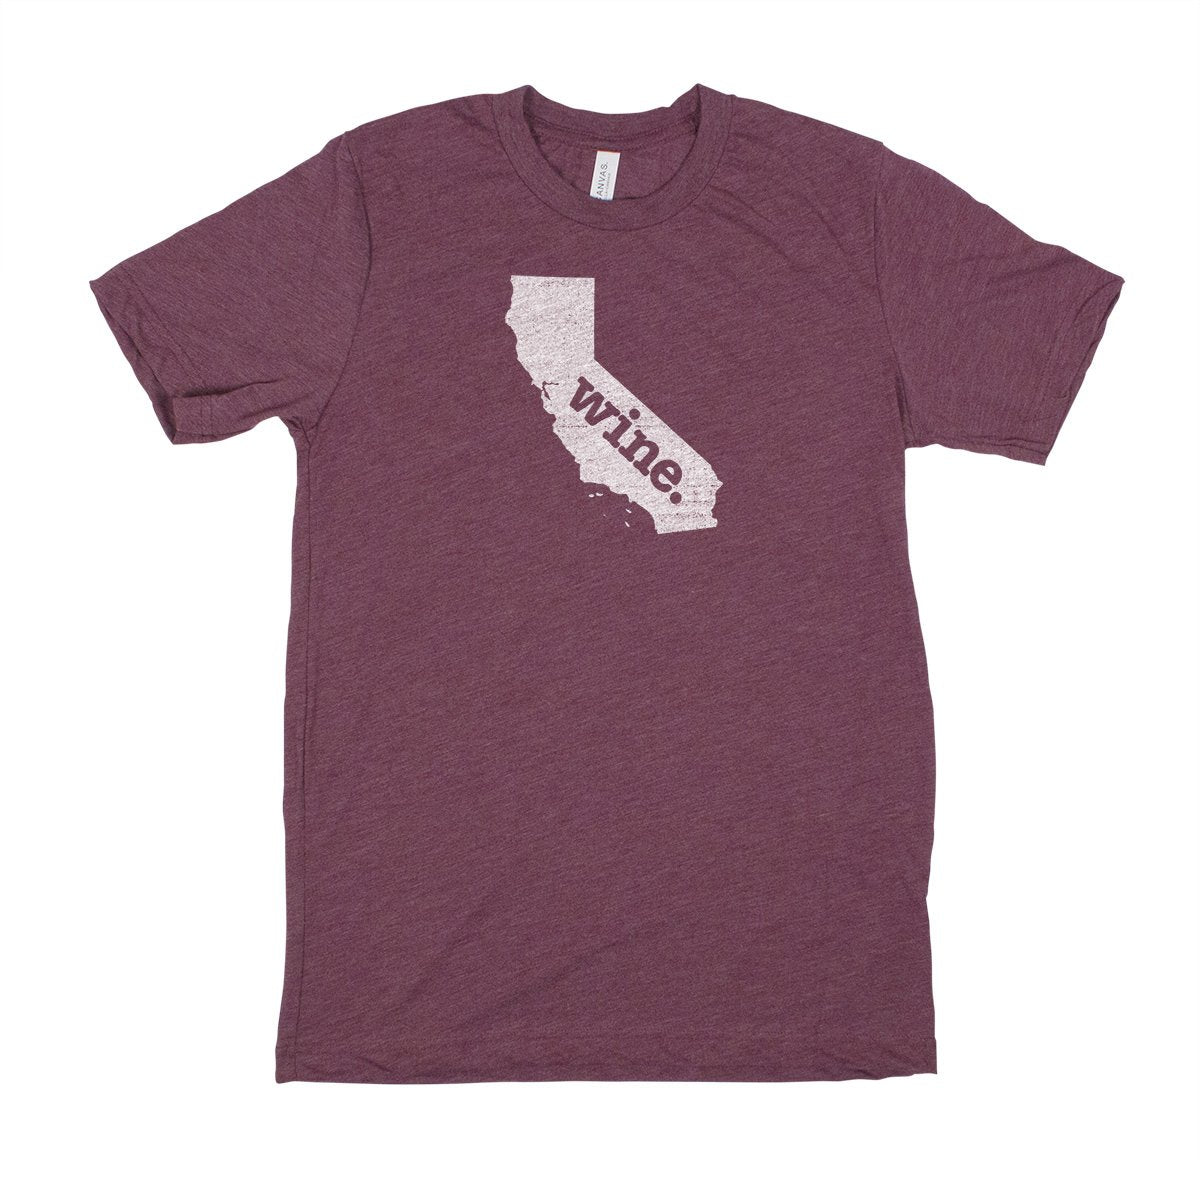 run. Men's Unisex T-Shirt - Iowa